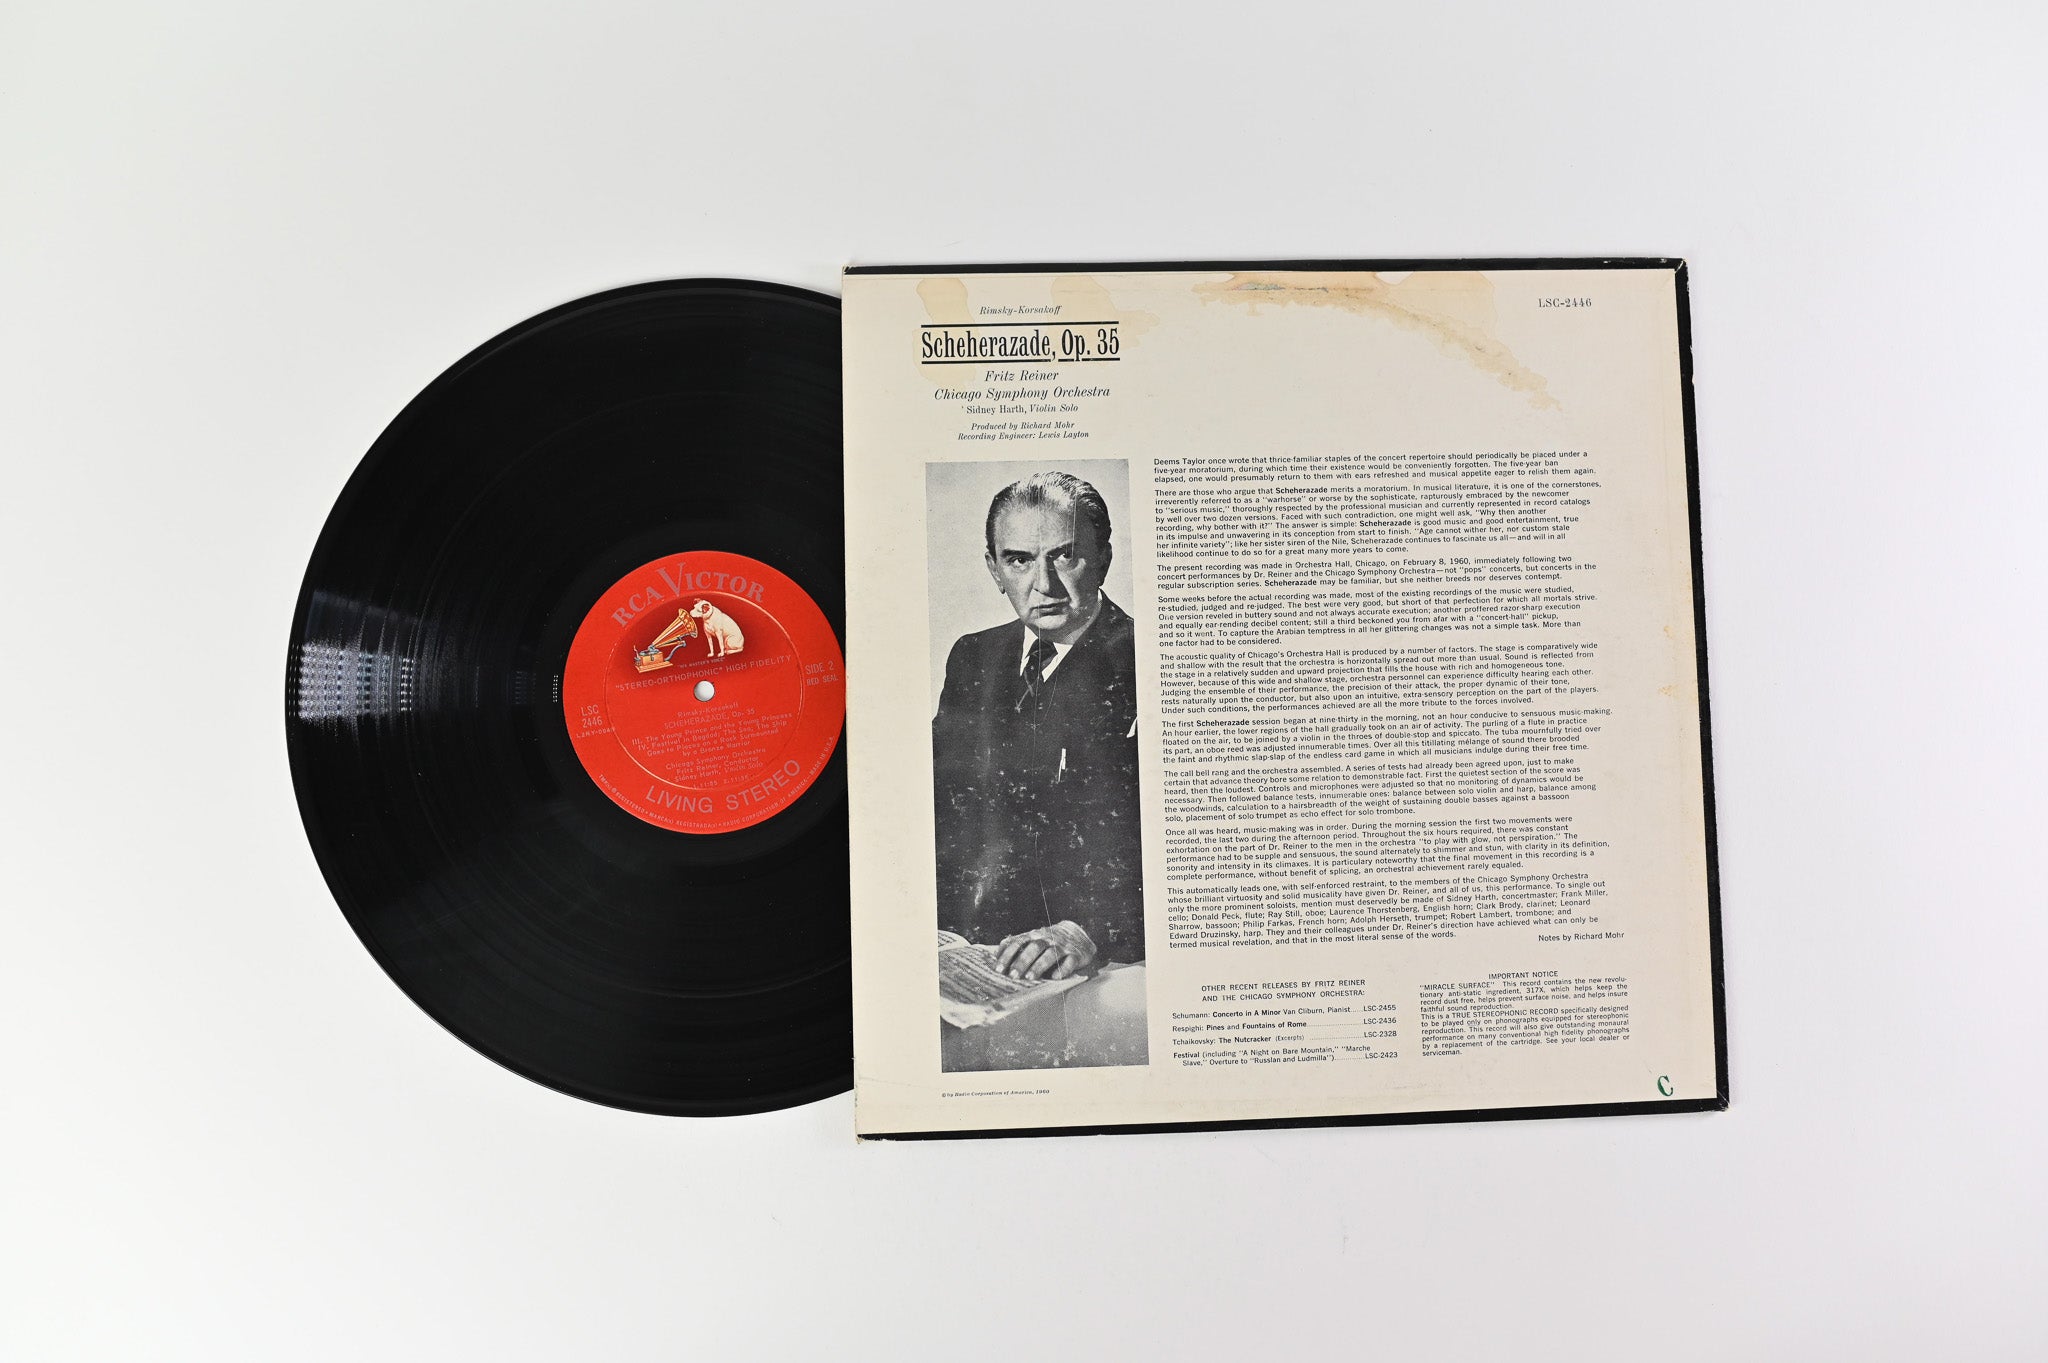 Nikolai Rimsky-Korsakov - Scheherazade on RCA Victor - Shaded Dog DG Stereo LSC 2446